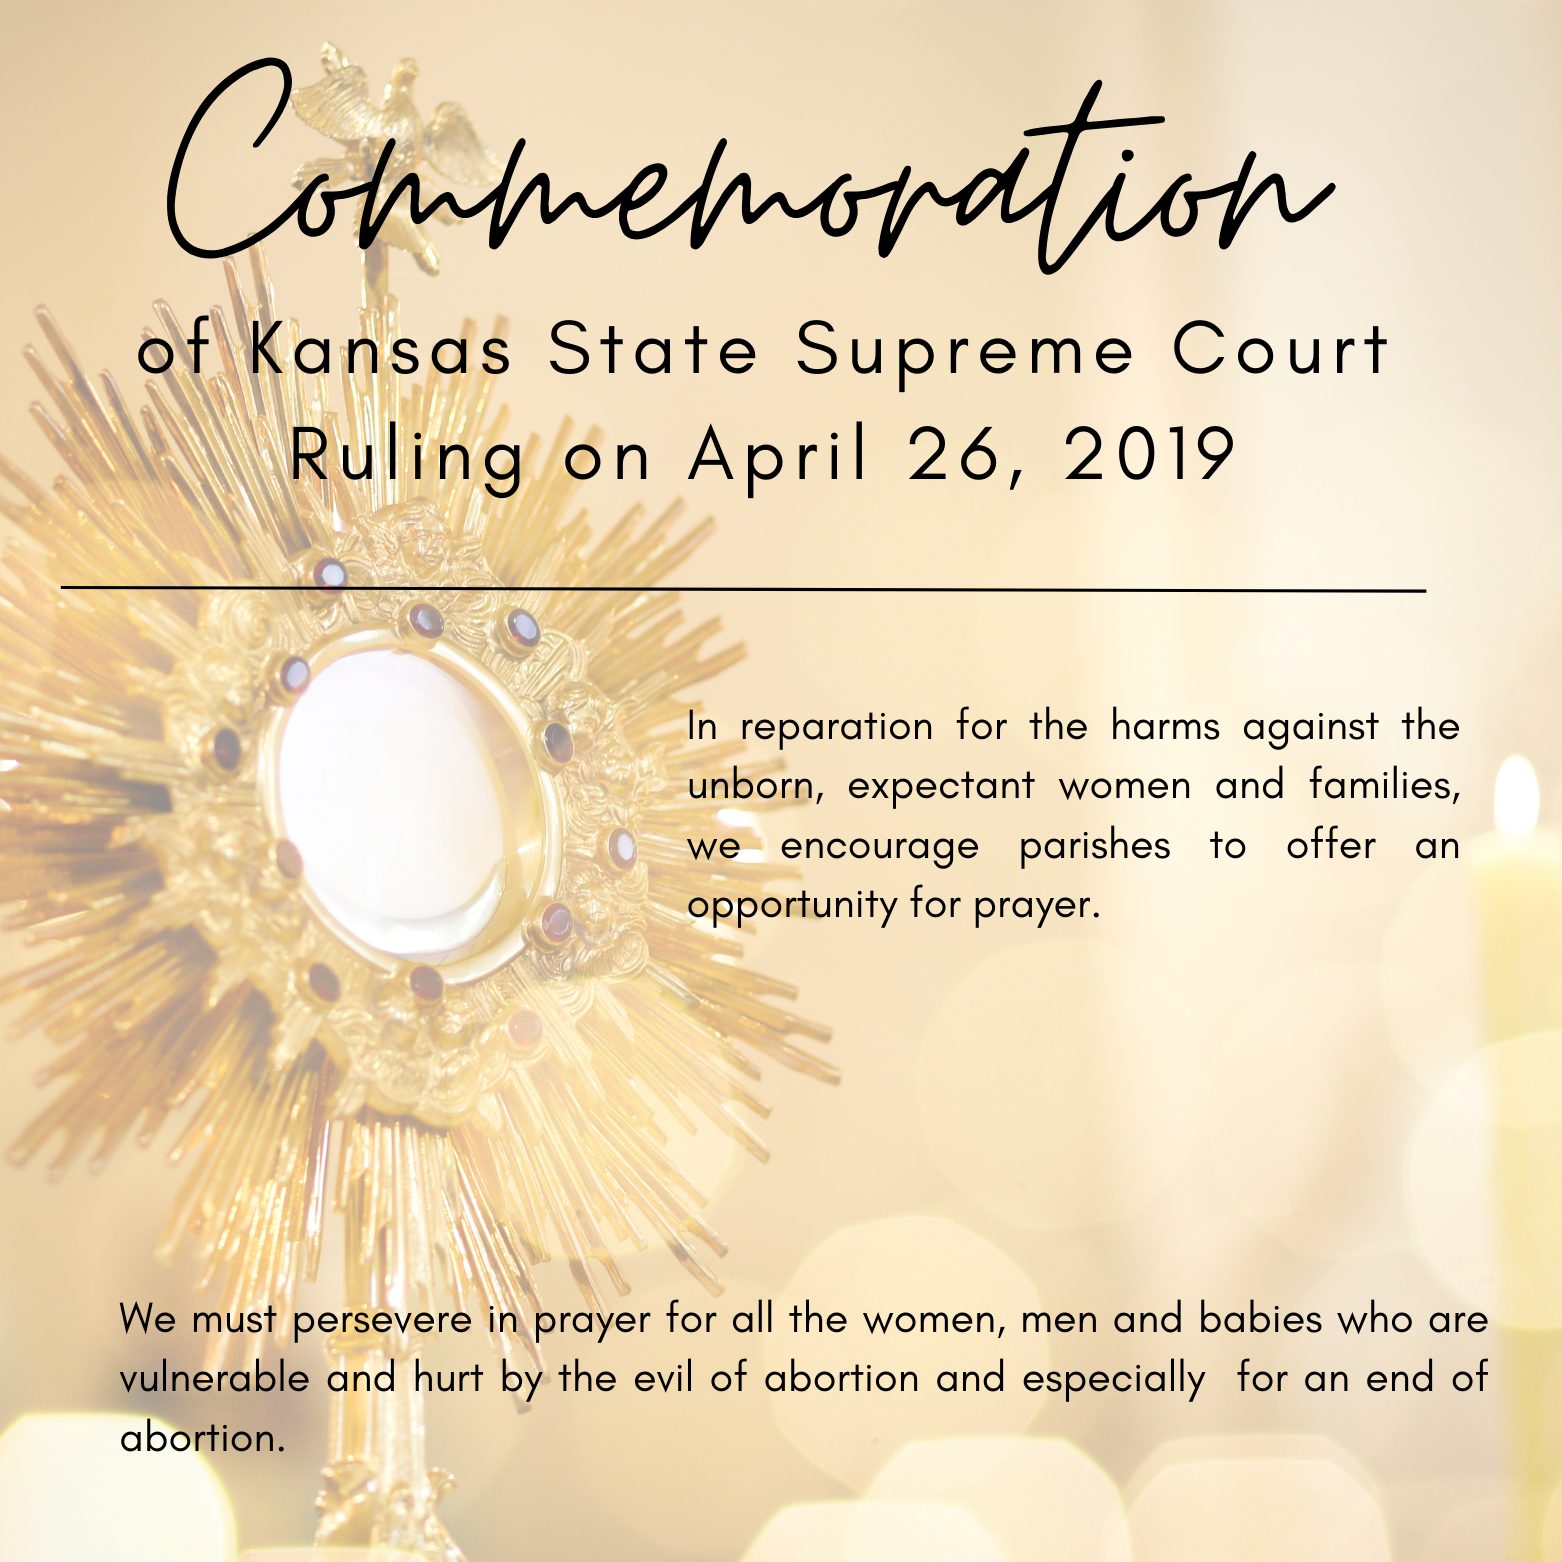 KS-Supreme-Court-Ruling-Anniversary_events.jpg